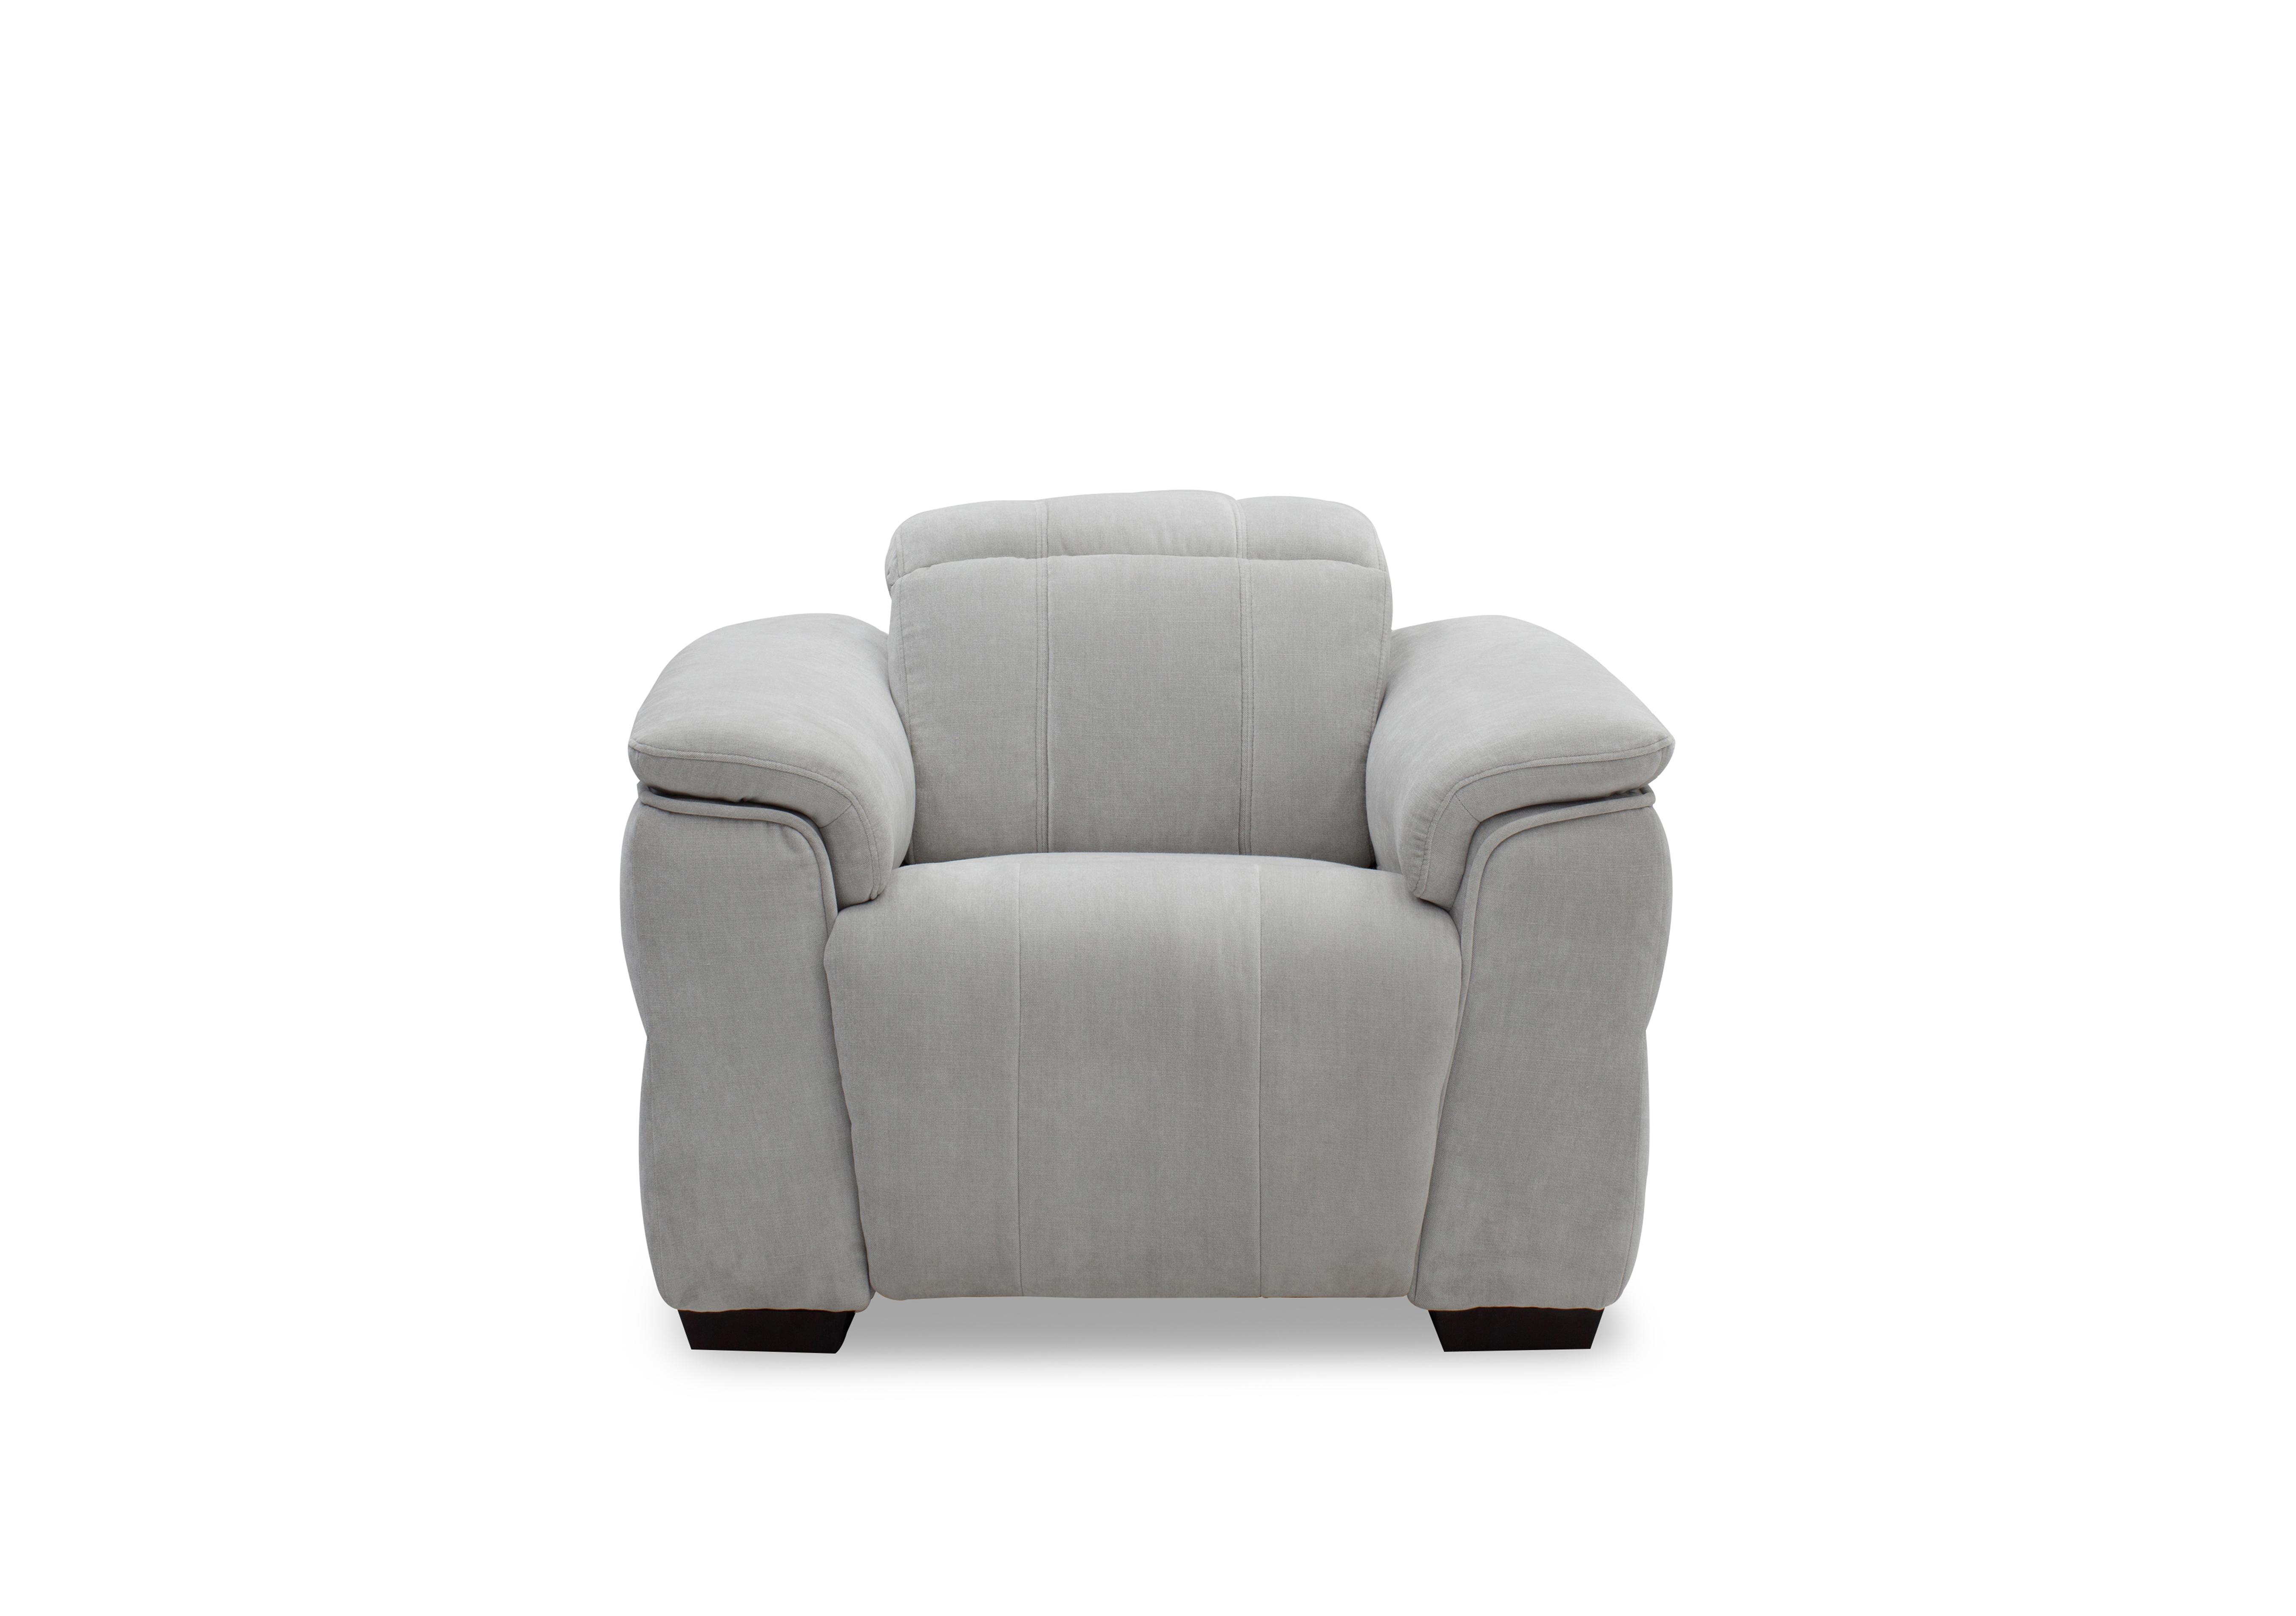 Inca Fabric Power Recliner Chair with Power Headrest in Manhattan Stone 58004 on Furniture Village